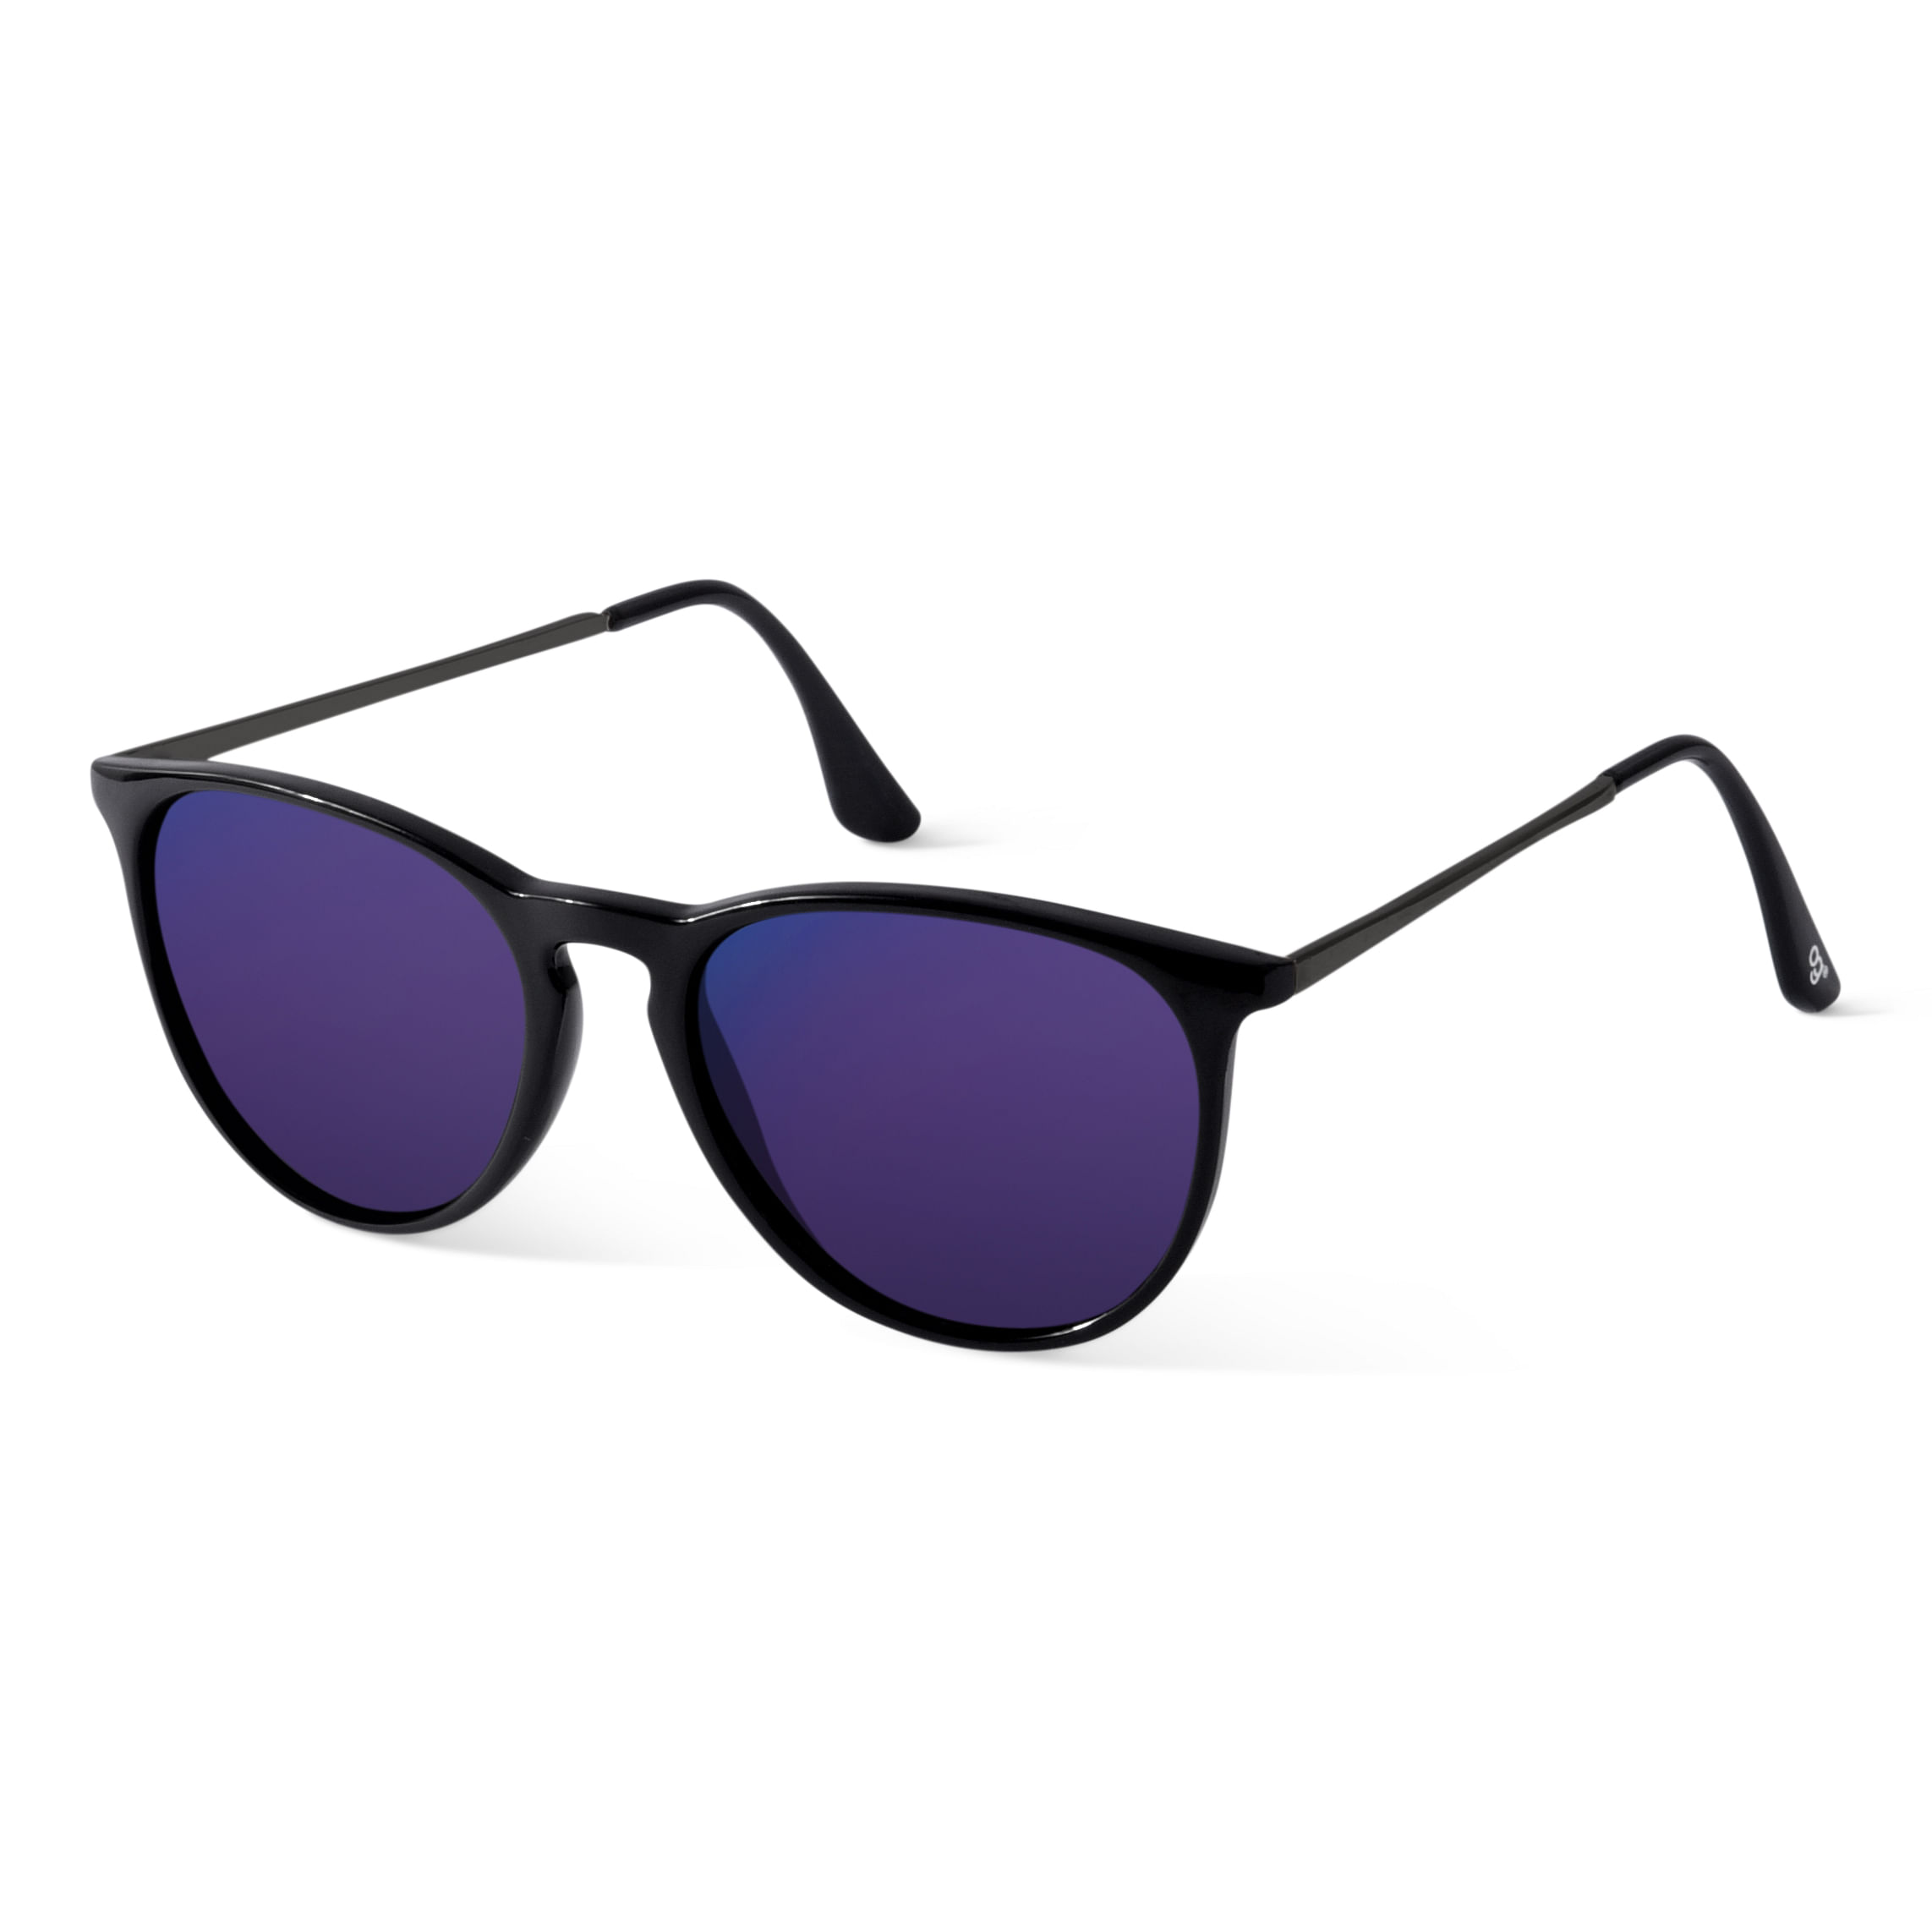 Discover 162+ reflector sunglasses online super hot